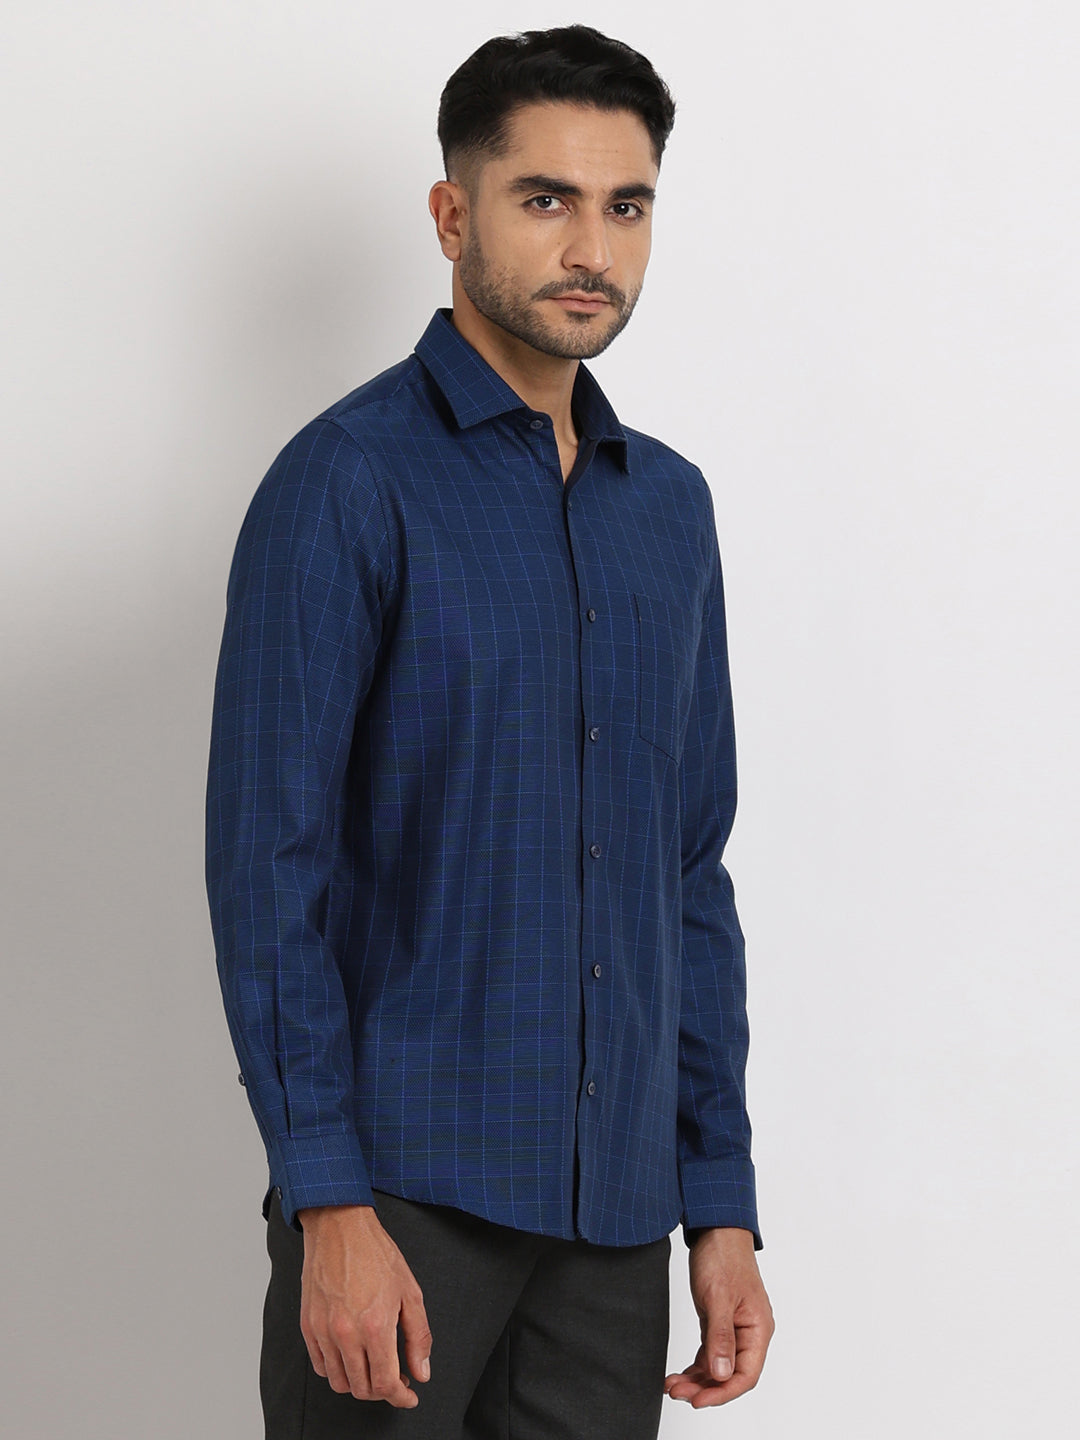 100% Cotton Navy Blue Checkered Slim Fit Full Sleeve Formal Shirt